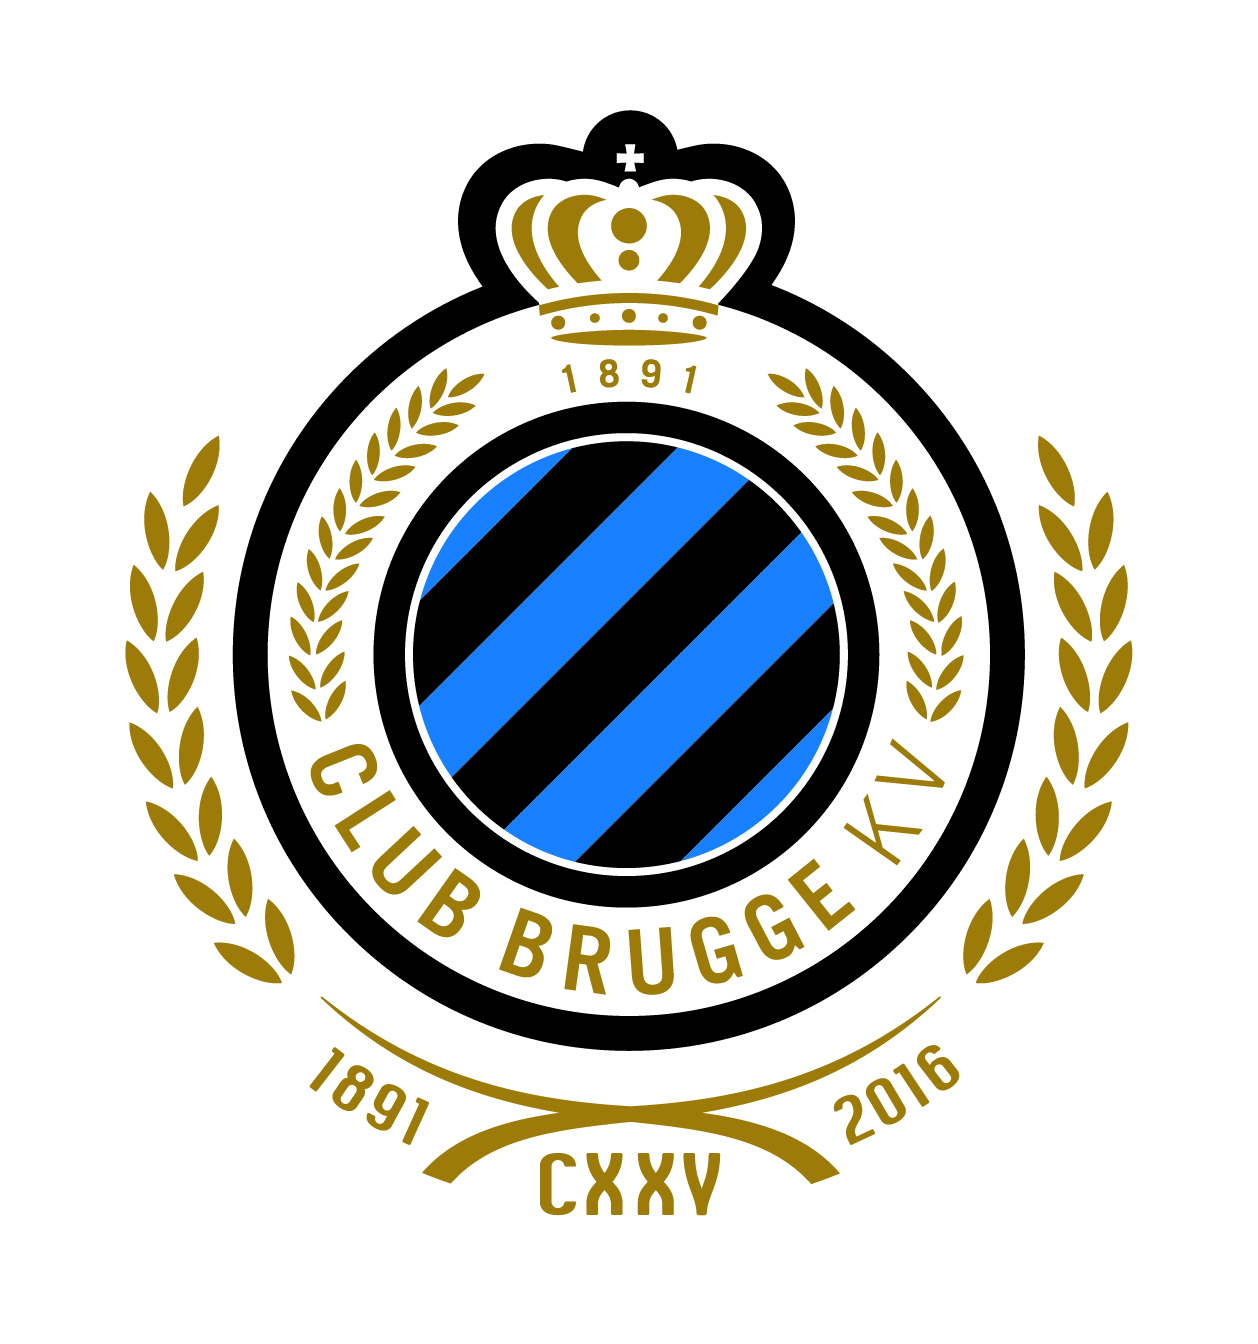 Club-Brugge-logo-2016-2017 - 1891 Shop